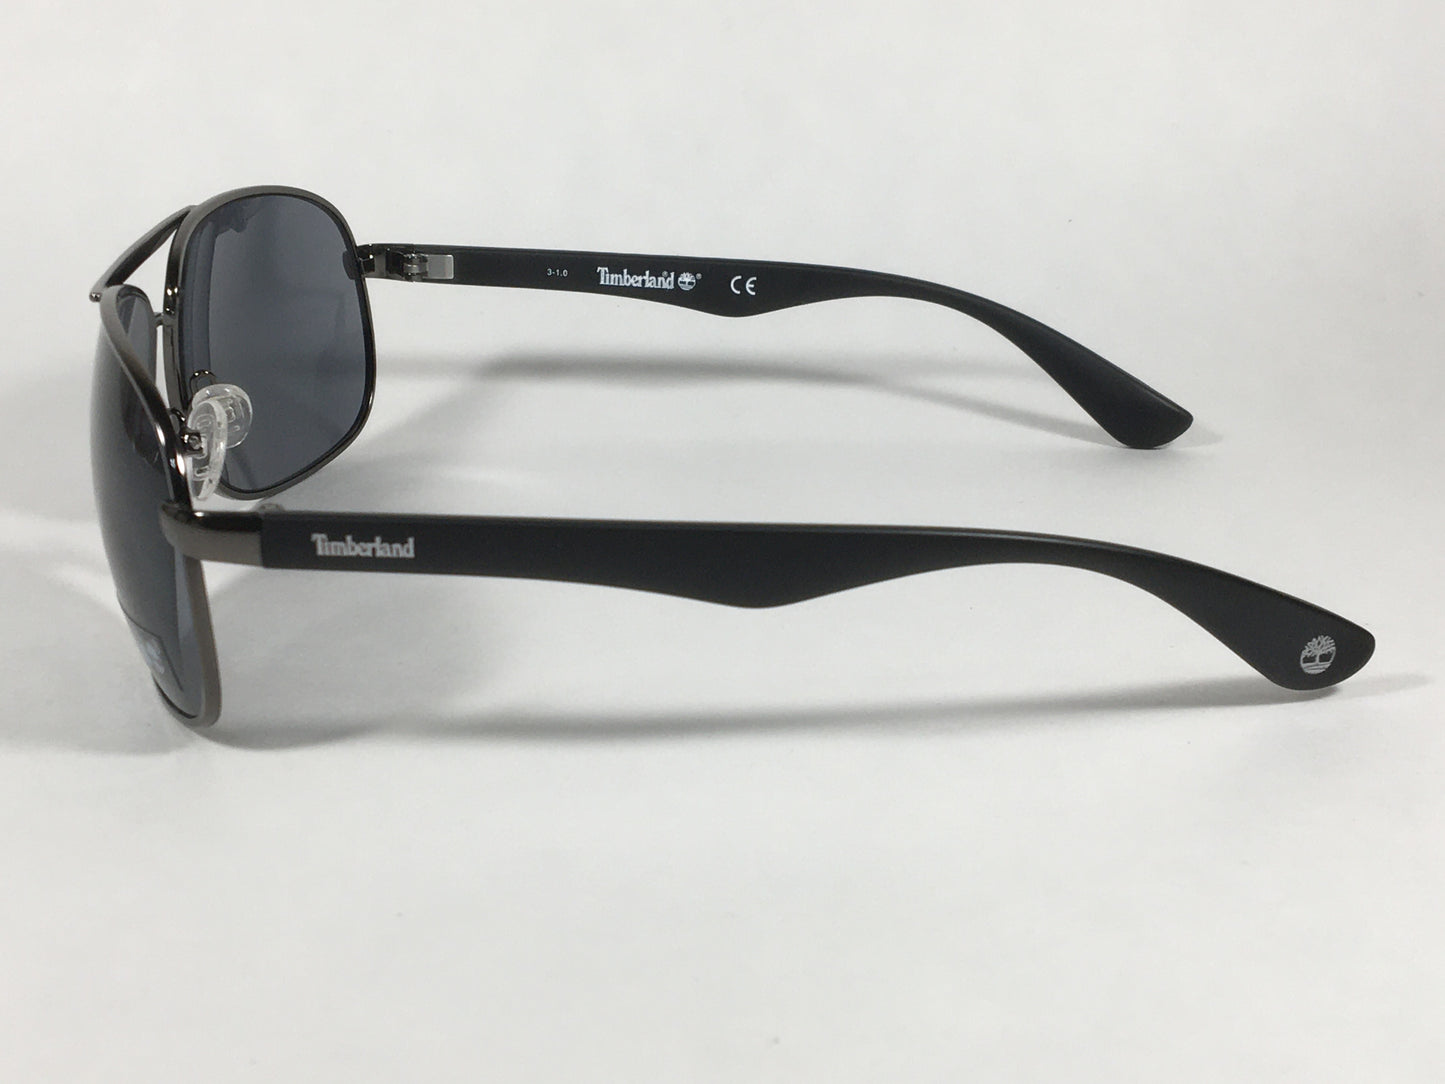 Timberland Aviator Sunglasses Matte Black And Gunmetal Frame Gray Lens TB7151 08A - Sunglasses